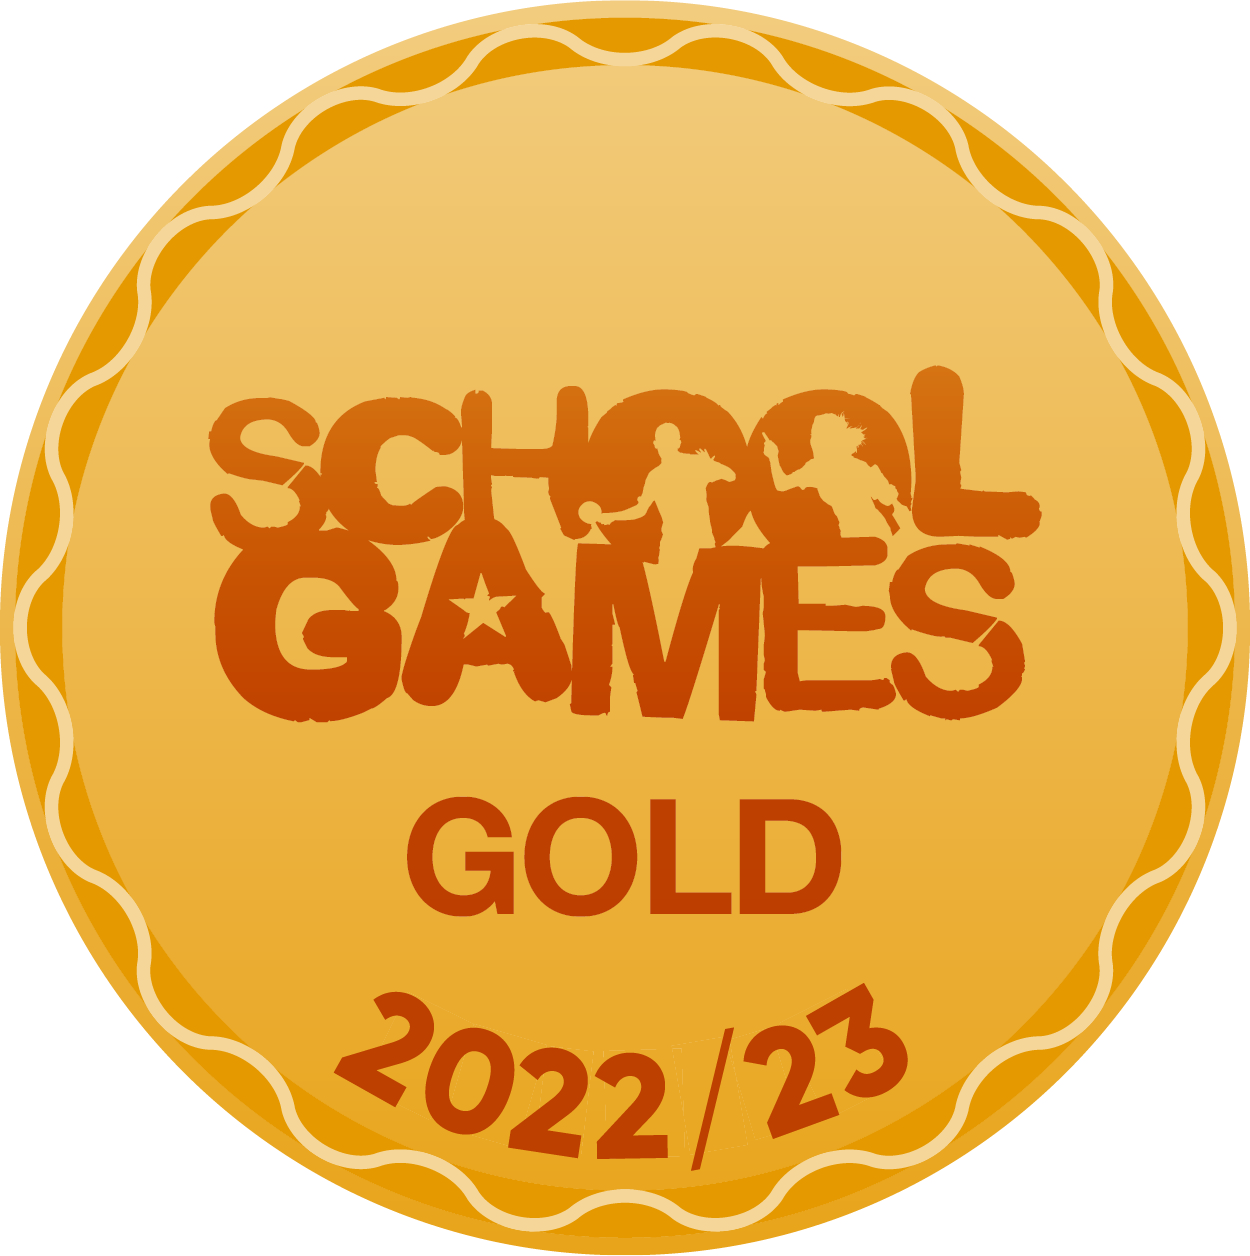 Gold School Games Award